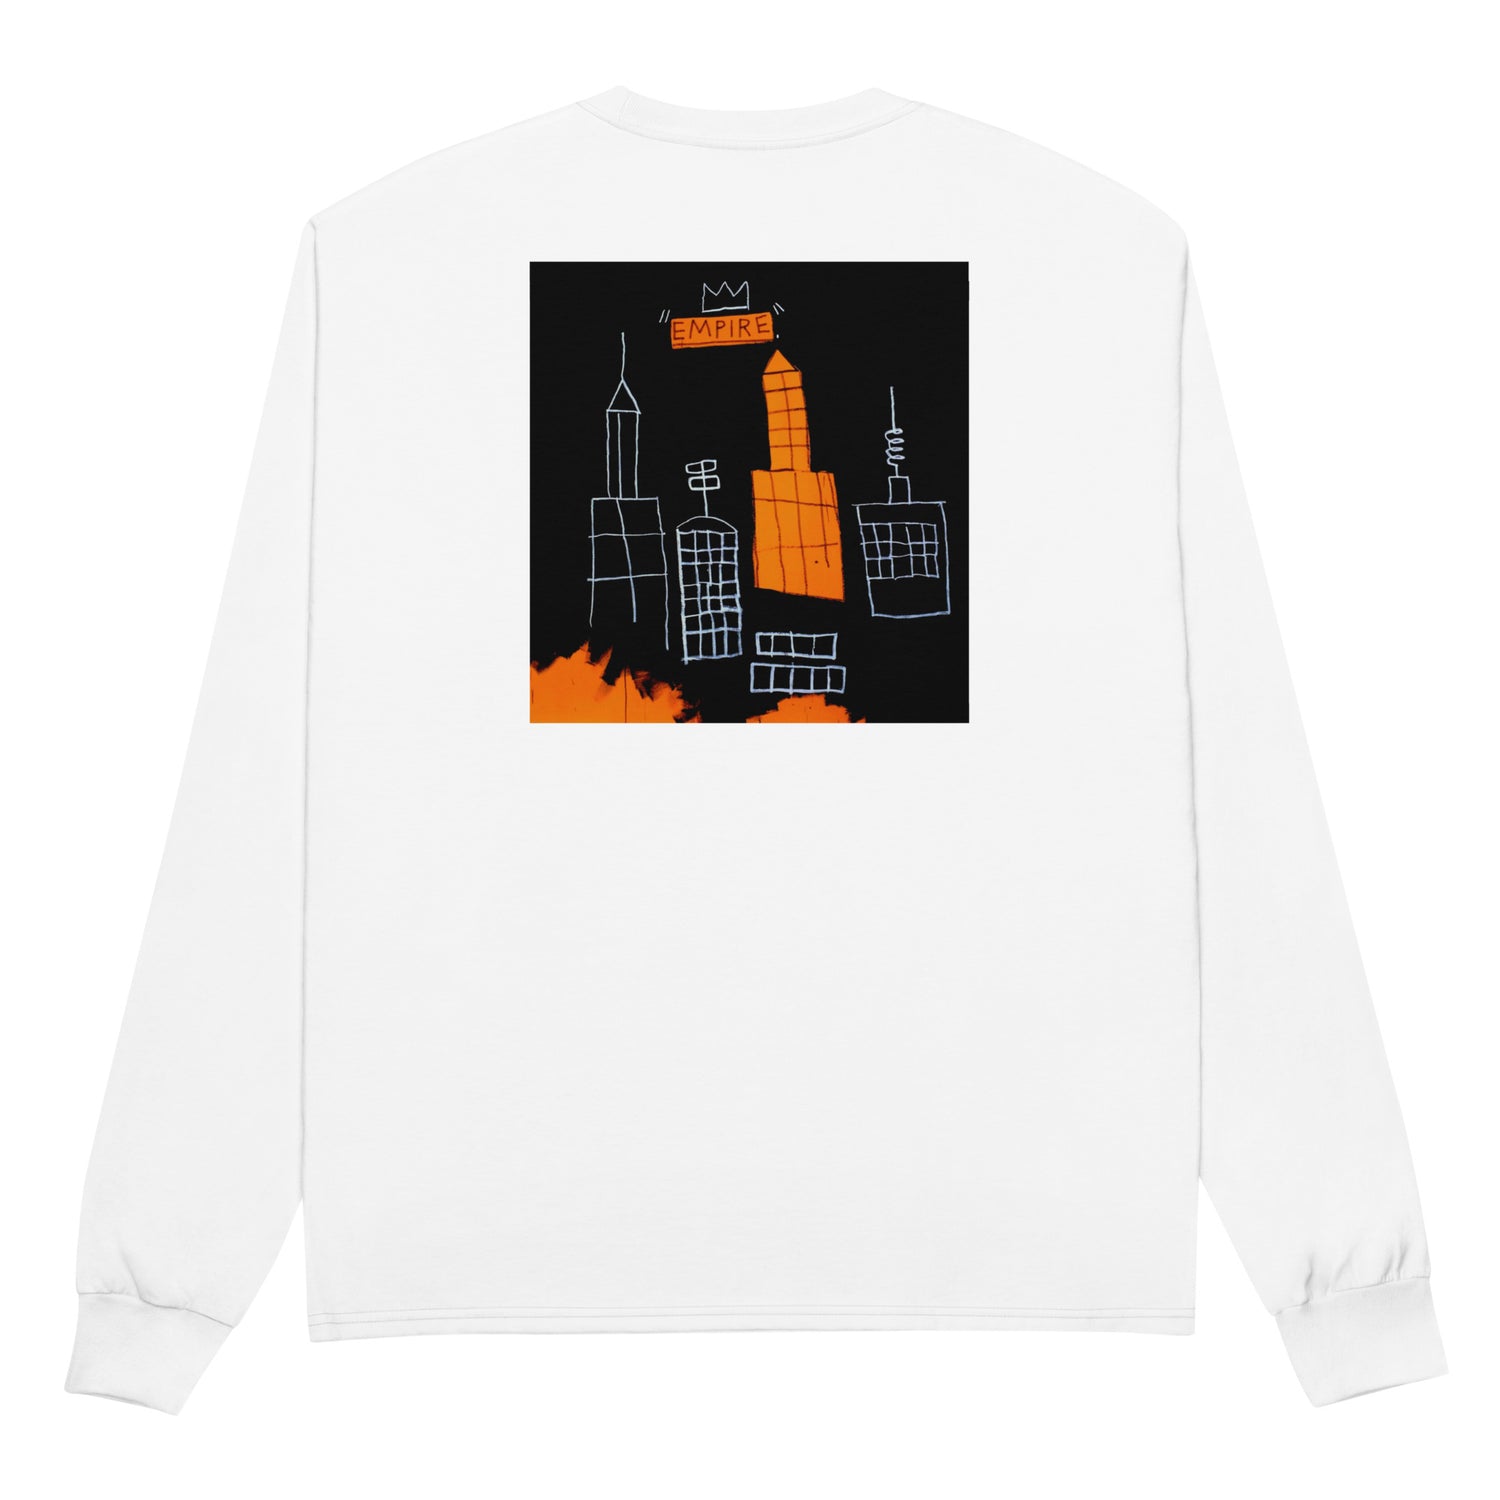 Jean-Michel Basquiat "Mecca" Artwork Embroidered + Printed Premium Champion Streetwear Long Sleeve Shirt White